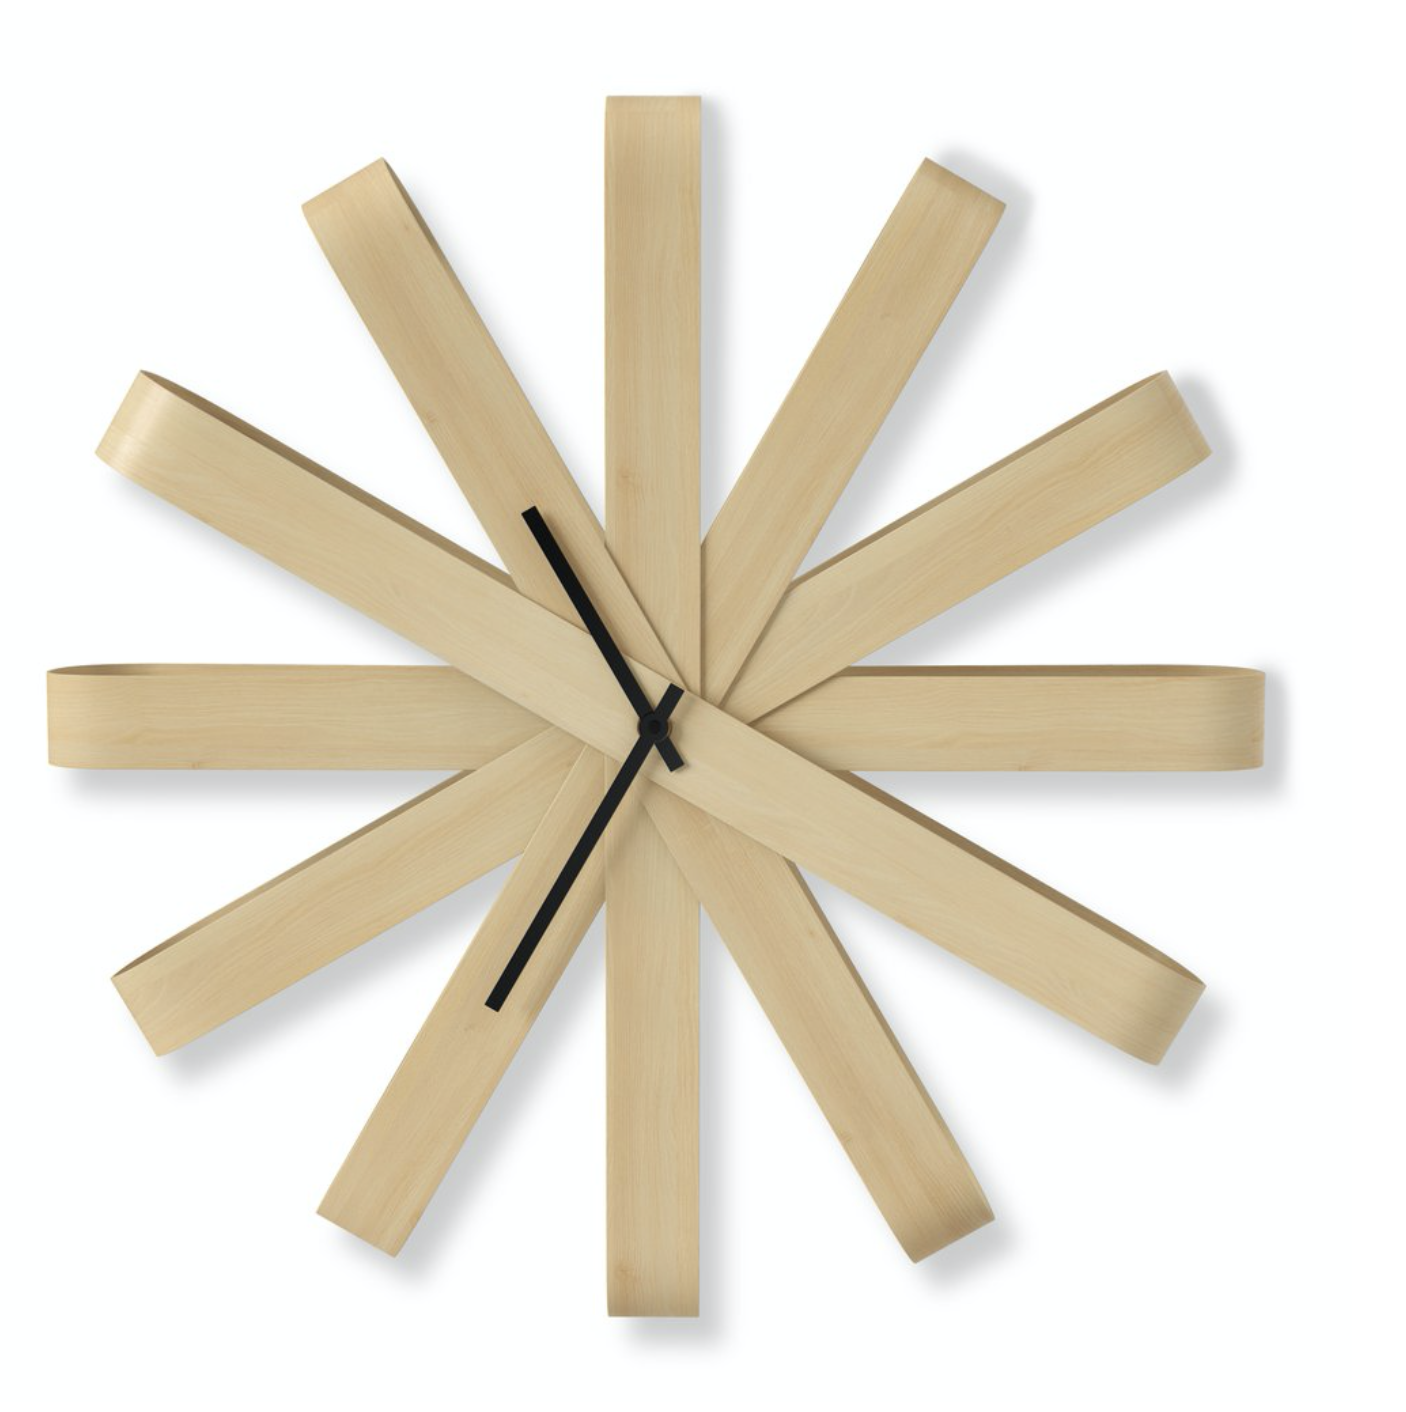 Ribbonwood beechwood wall clock by Canada's Umbra design company, £50